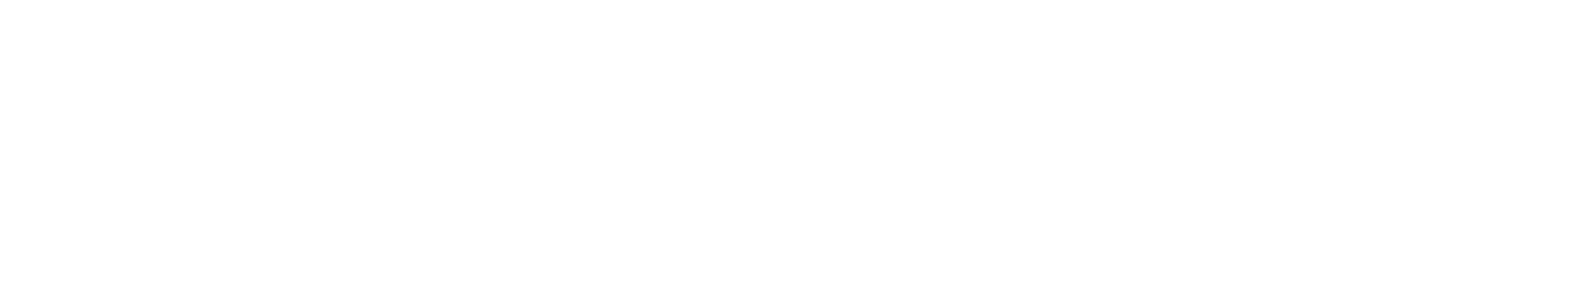 Munters Group AB Logo groß für dunkle Hintergründe (transparentes PNG)